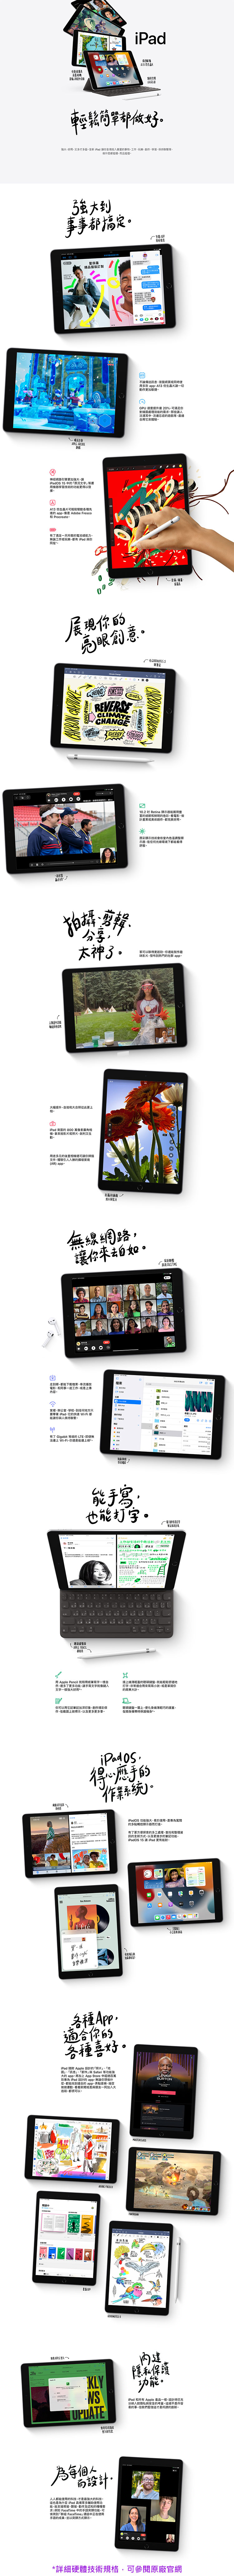 Apple 第九代 iPad 10.2 吋 64G WiFi 太空灰 (MK2K3TA/A)